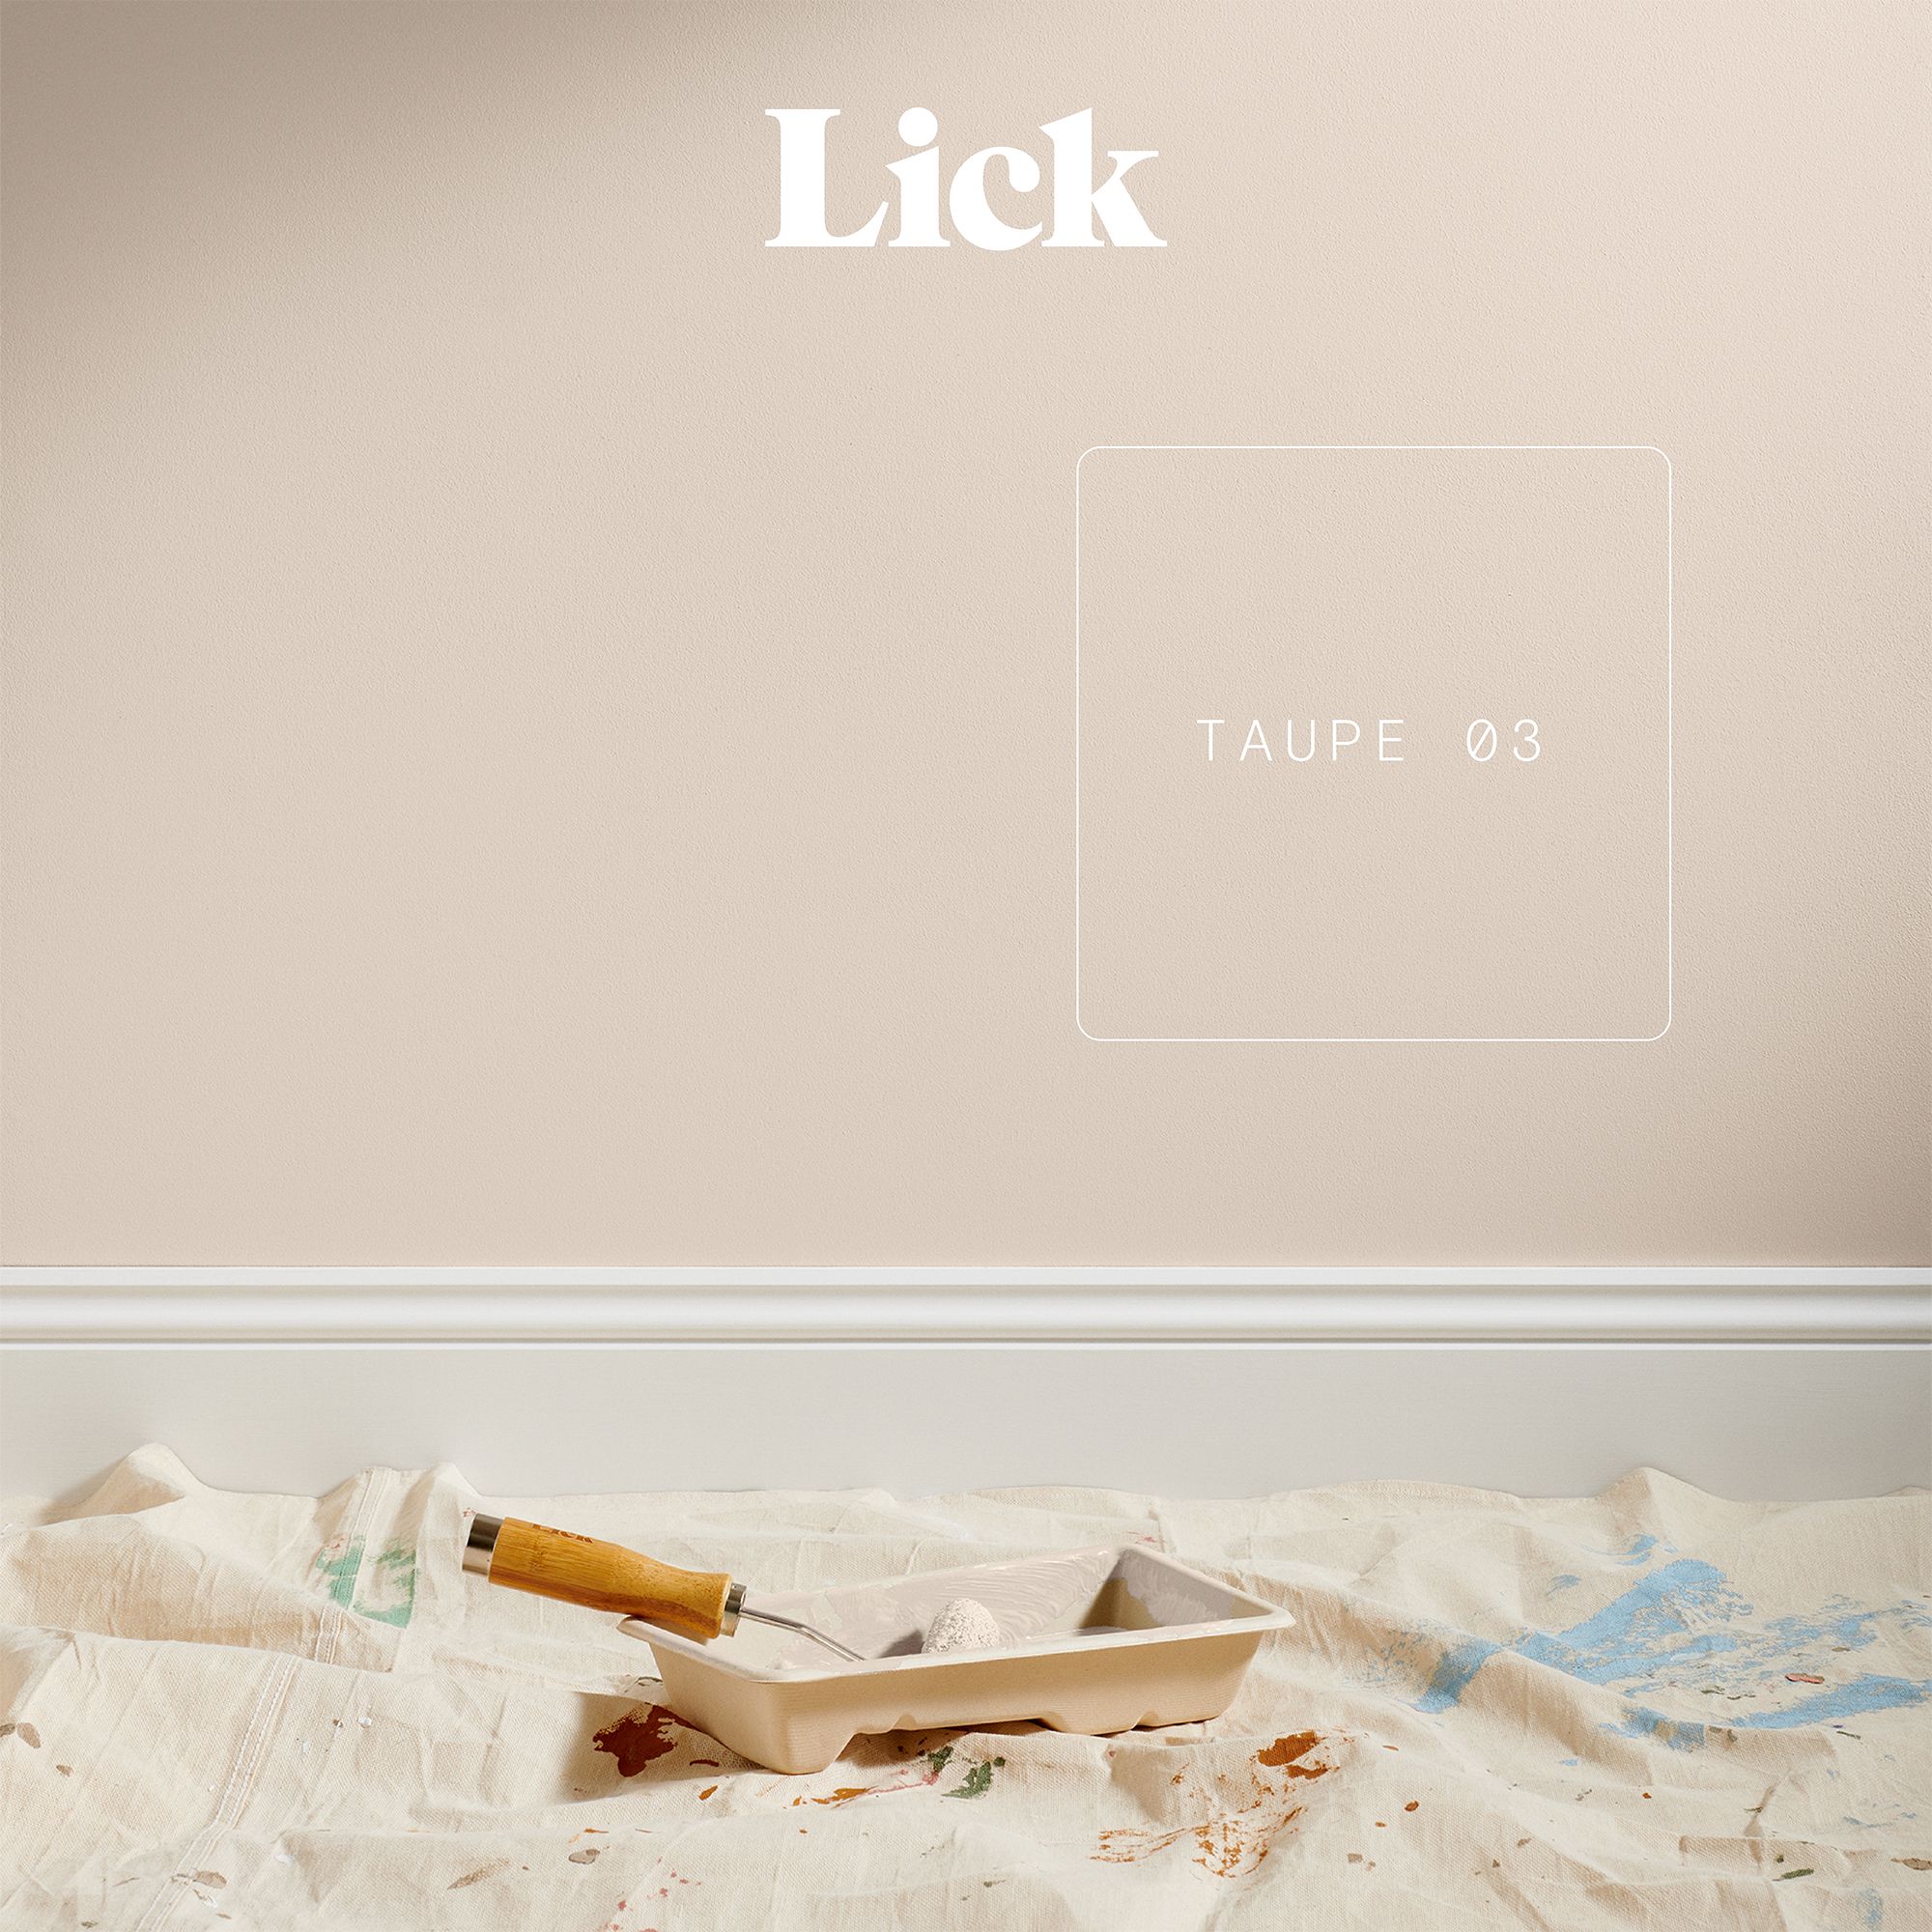 Lick Taupe 03 Peel & stick Tester